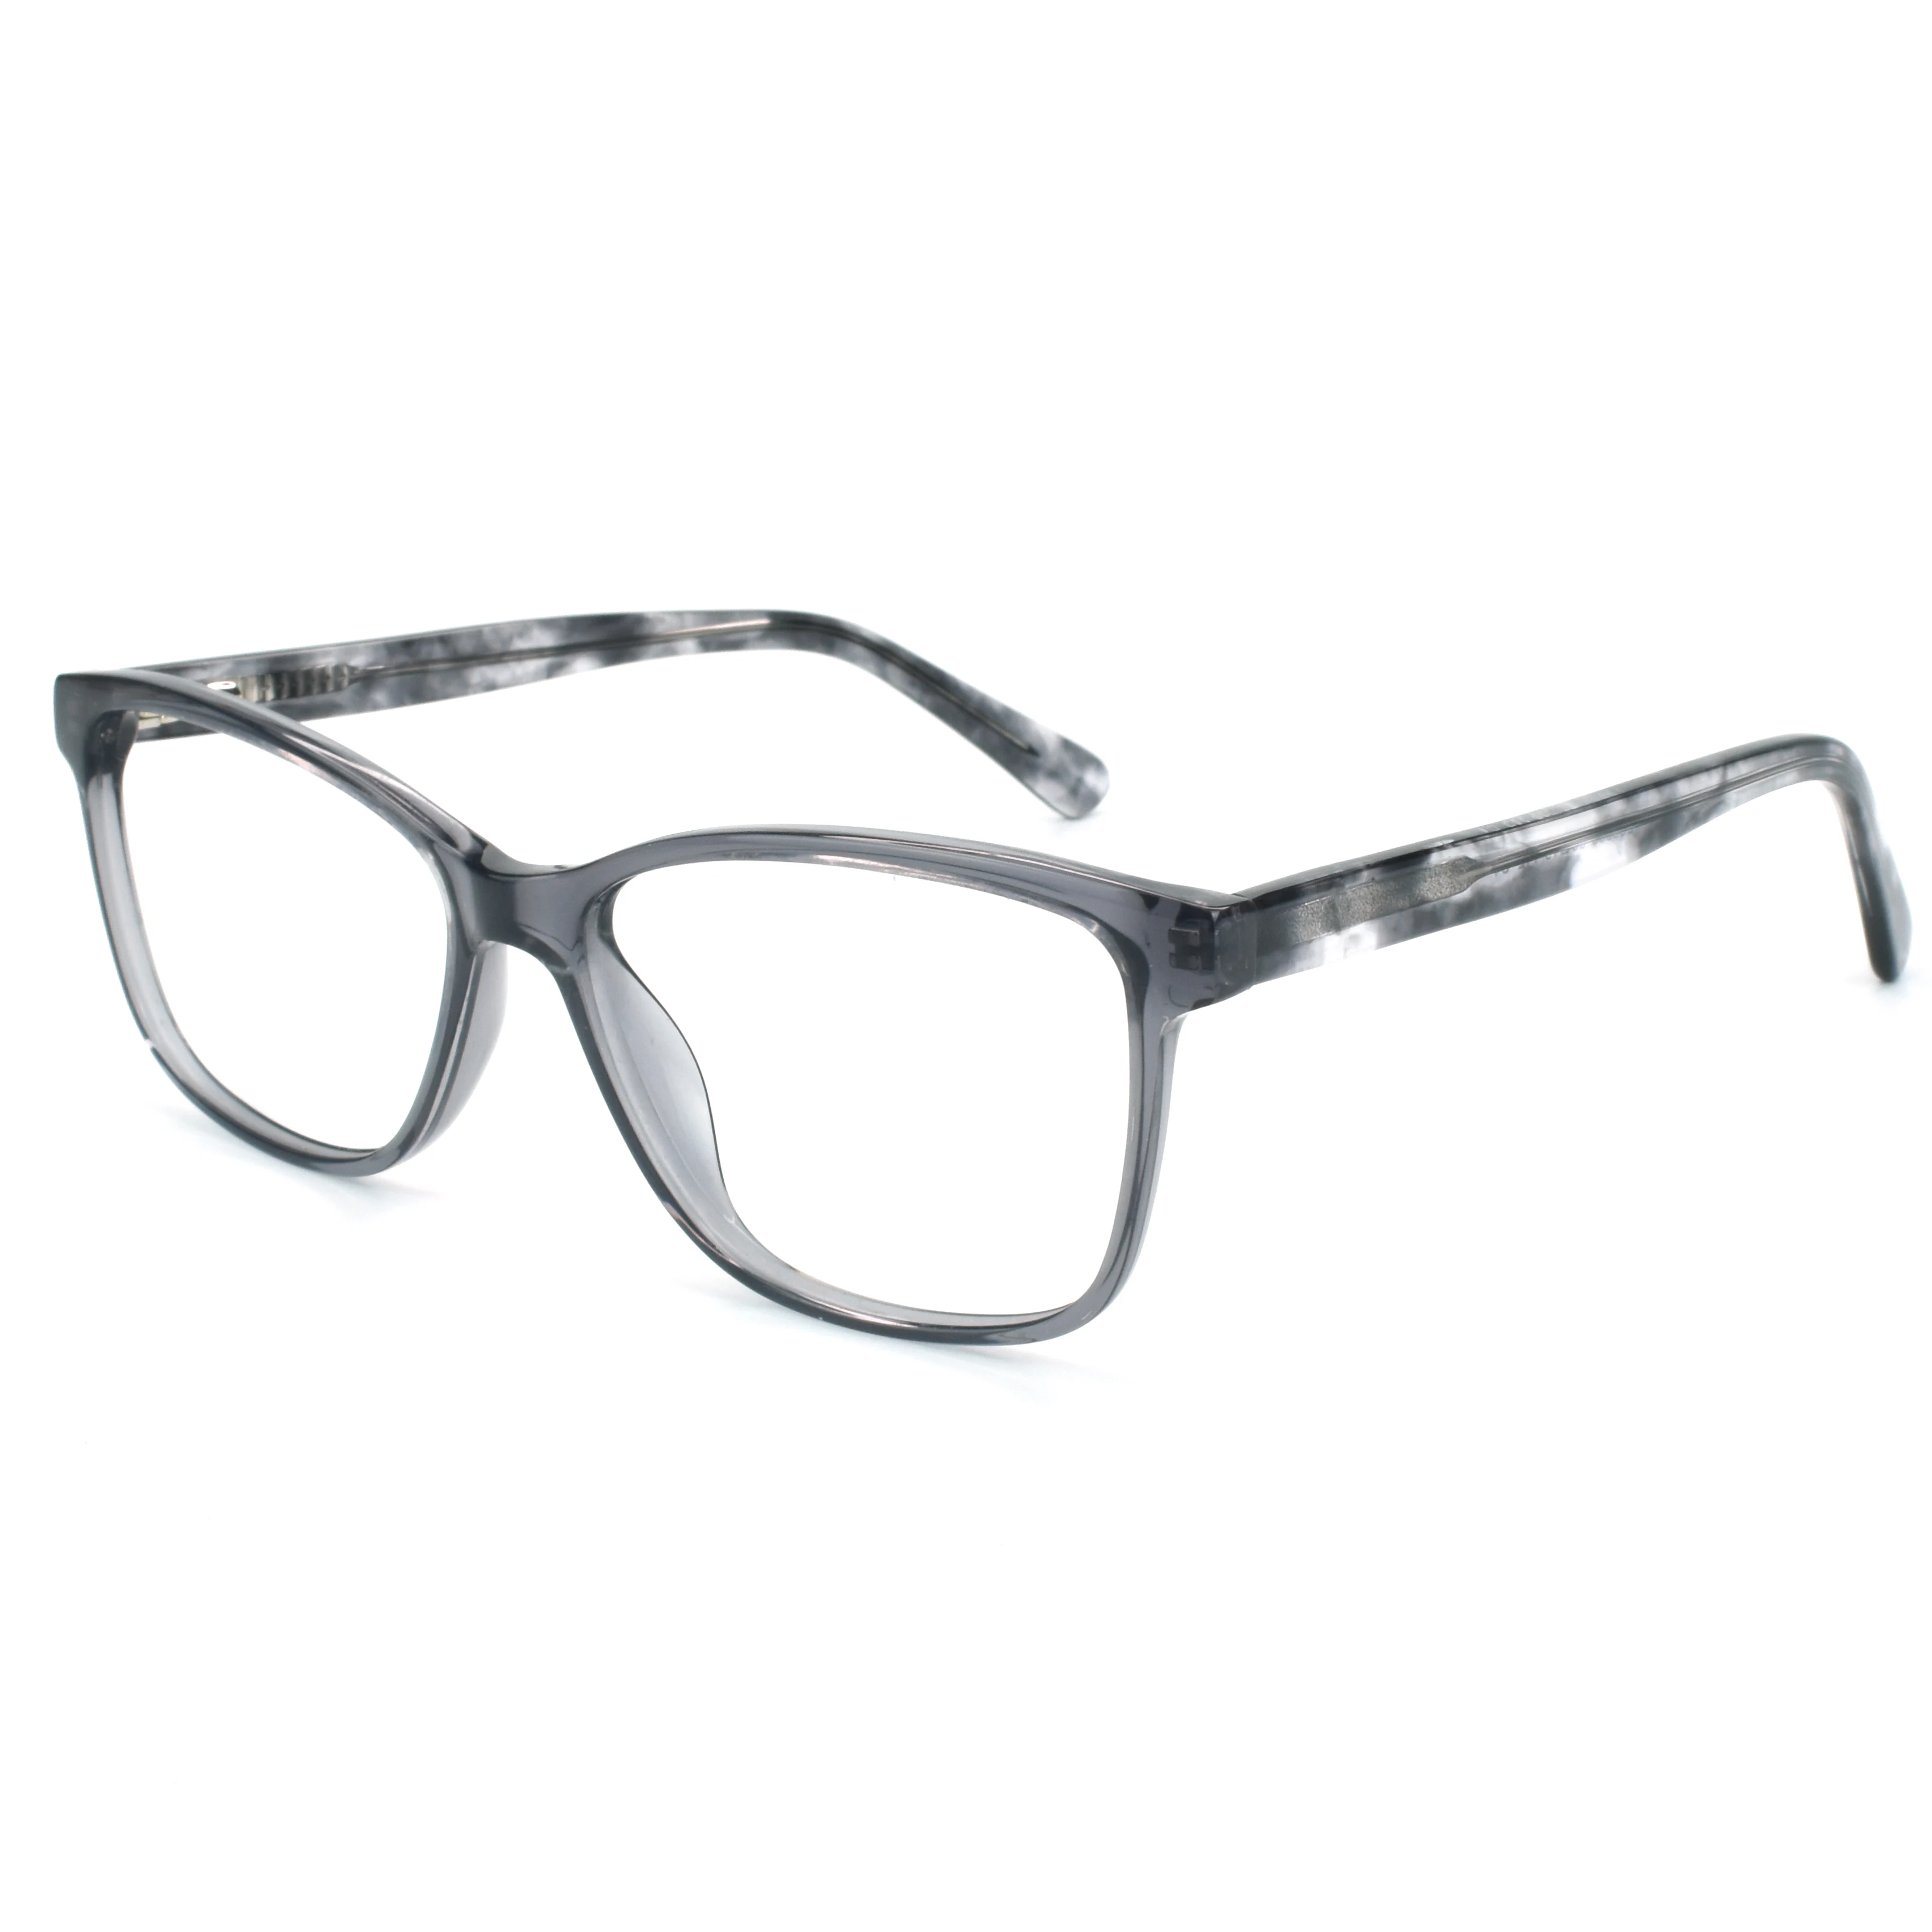 

2021 Top quality new acetate gafas optical frames eyewear unisex anti blue light blocking computer safety glasses, 4 colors